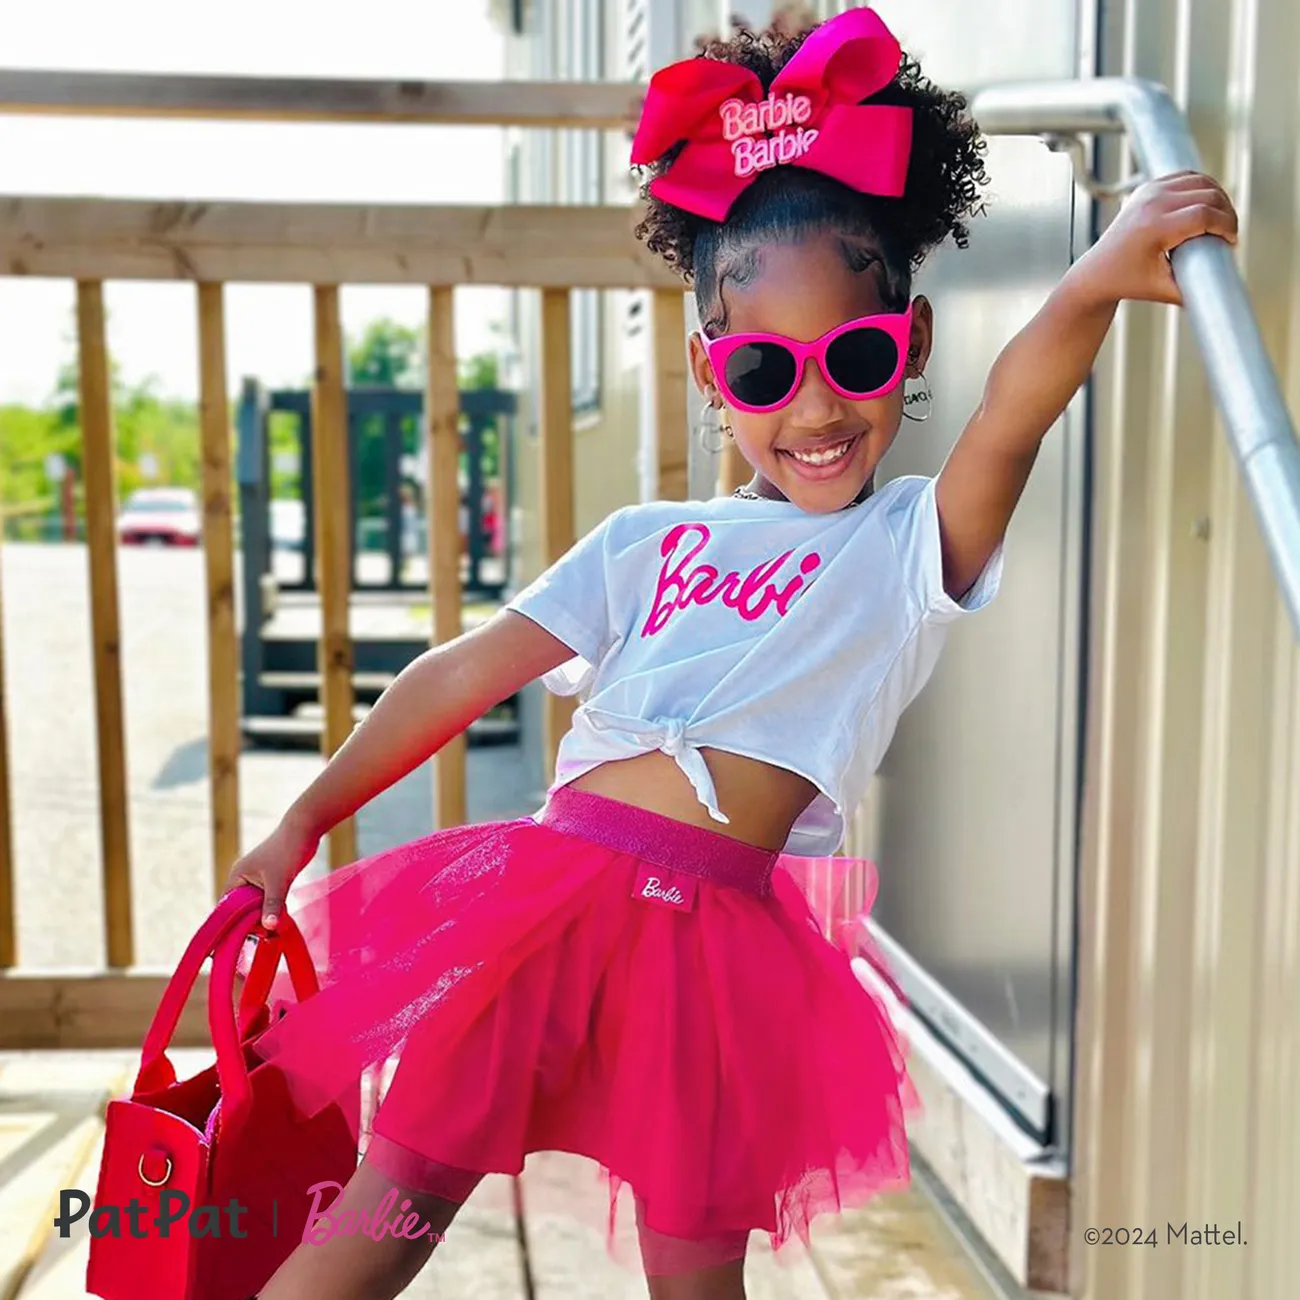 Barbie Toddler Kid Girl Dress / Bomber Jacket / Cami Romper / Sets / Sibling Matching Rompers PinkyWhite#2 big image 1